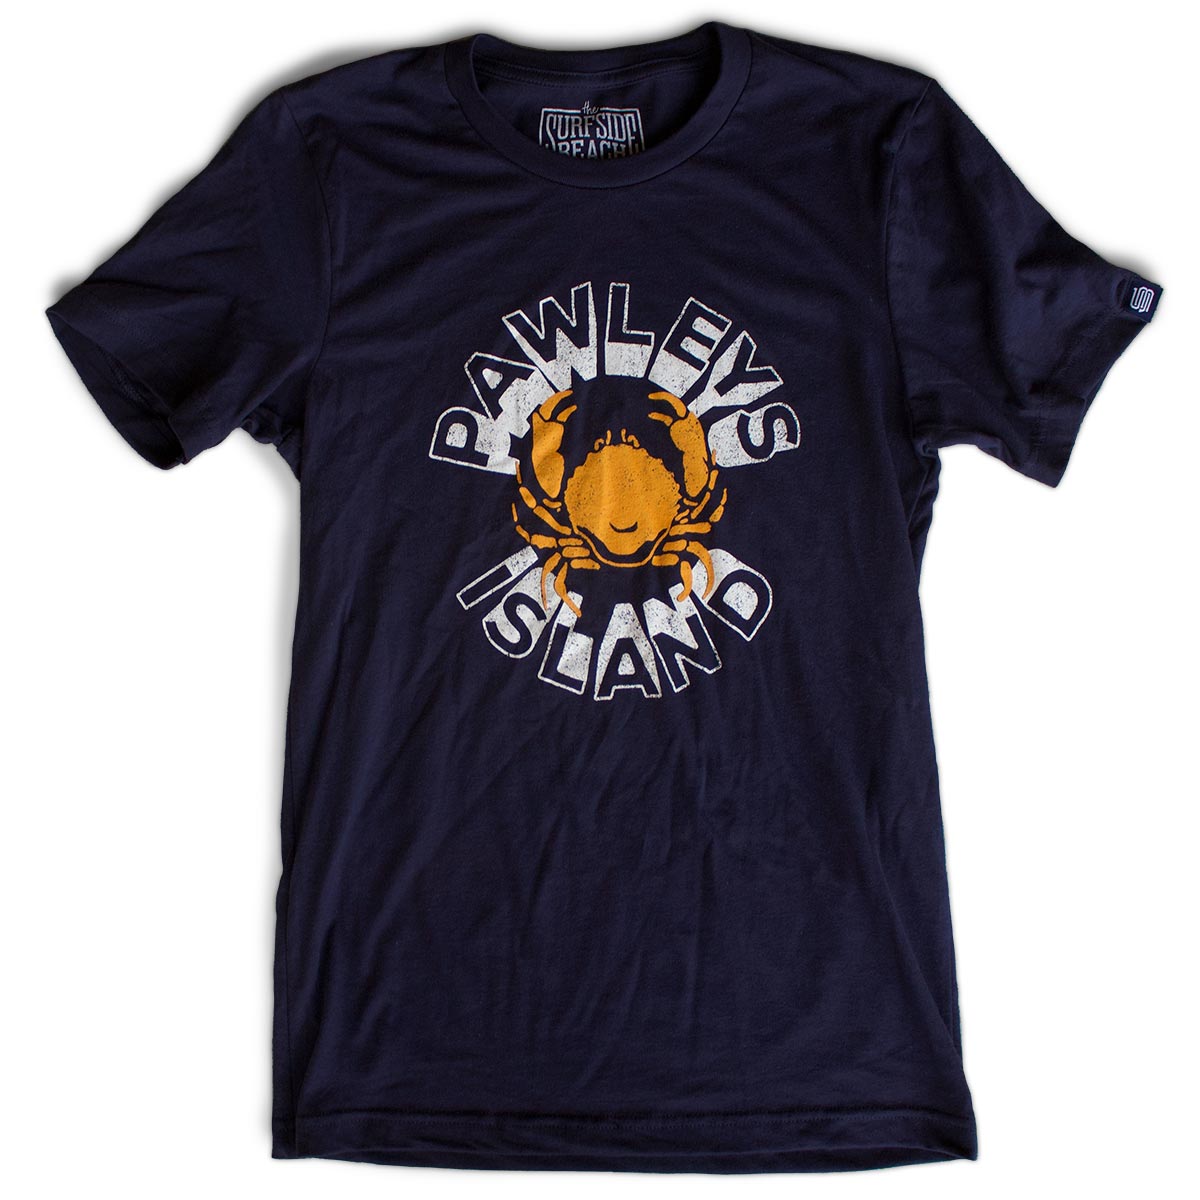 Pawleys Island (Circle Crab) premium T-shirt